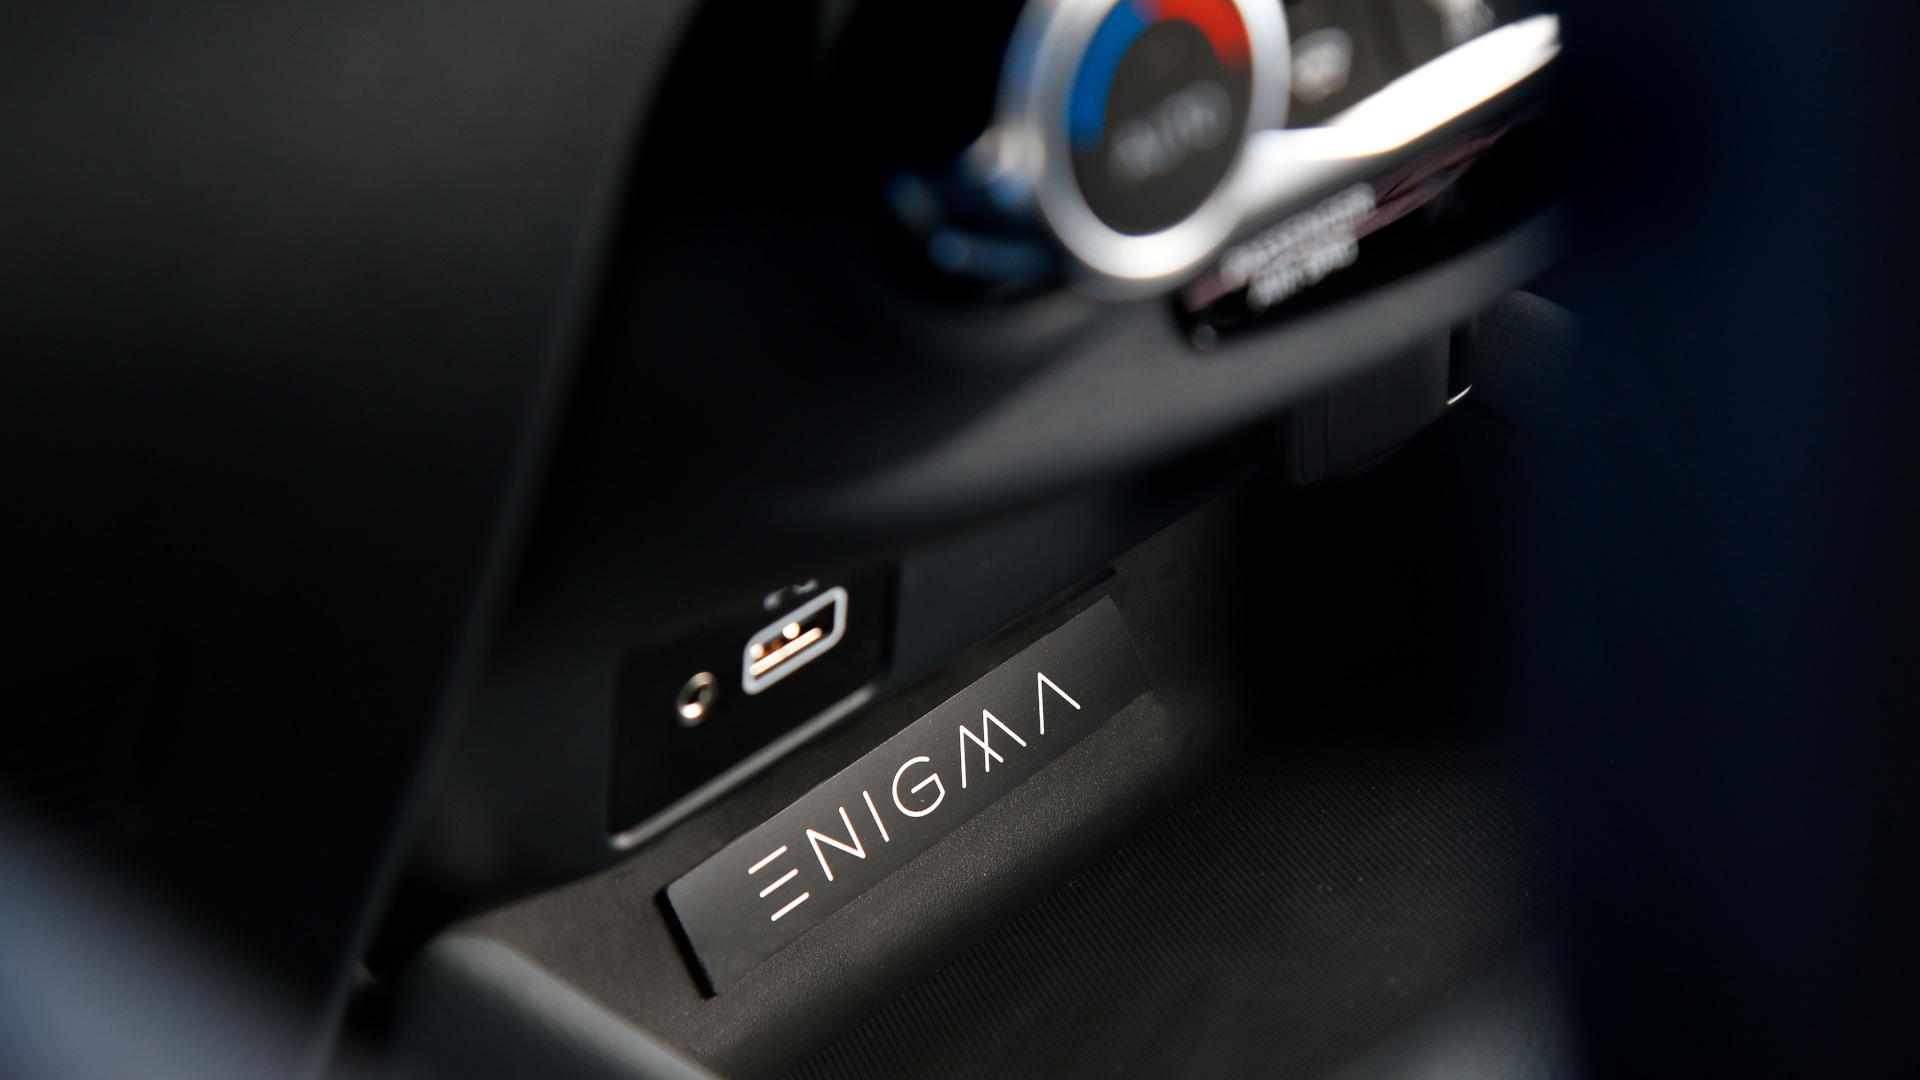 Nissan Juke Enigma - Enigma brand below the dashboard